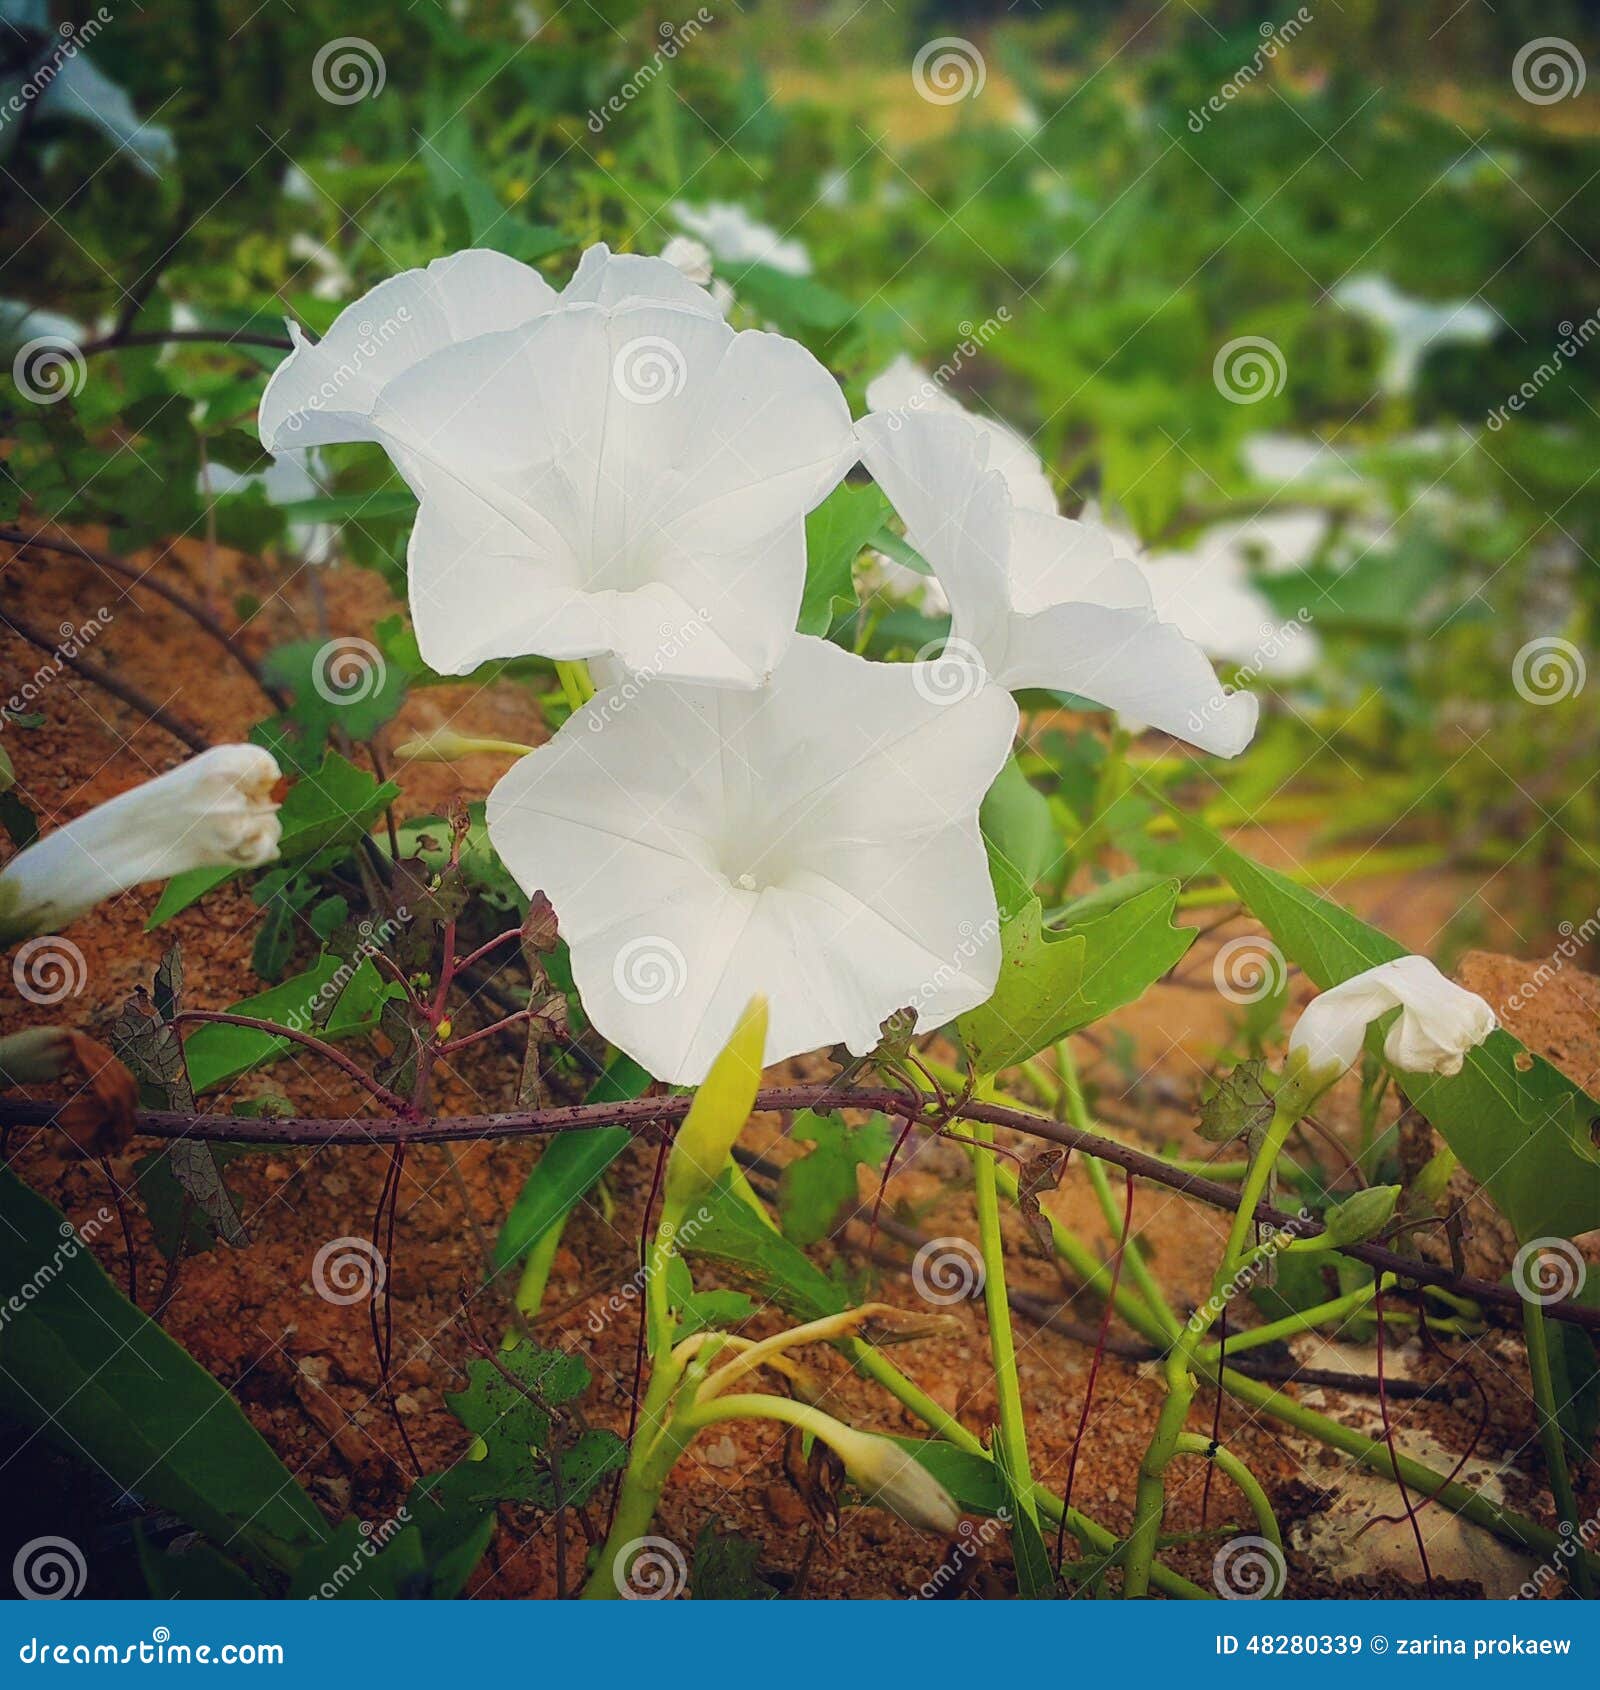 white morning glory flowers